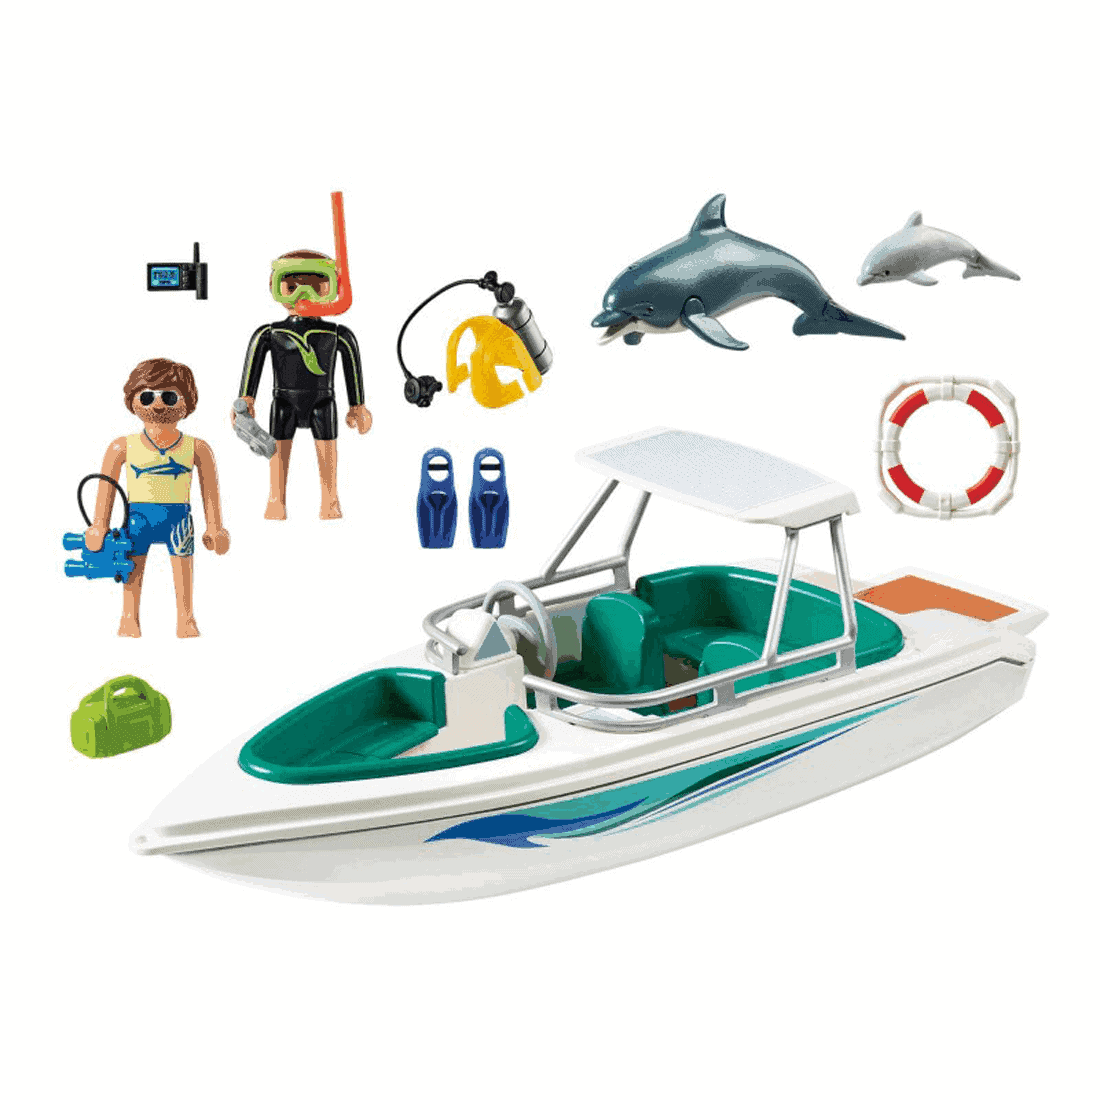 Playmobil - Ταχύπλοο Με Δύτη Και Δελφίνια